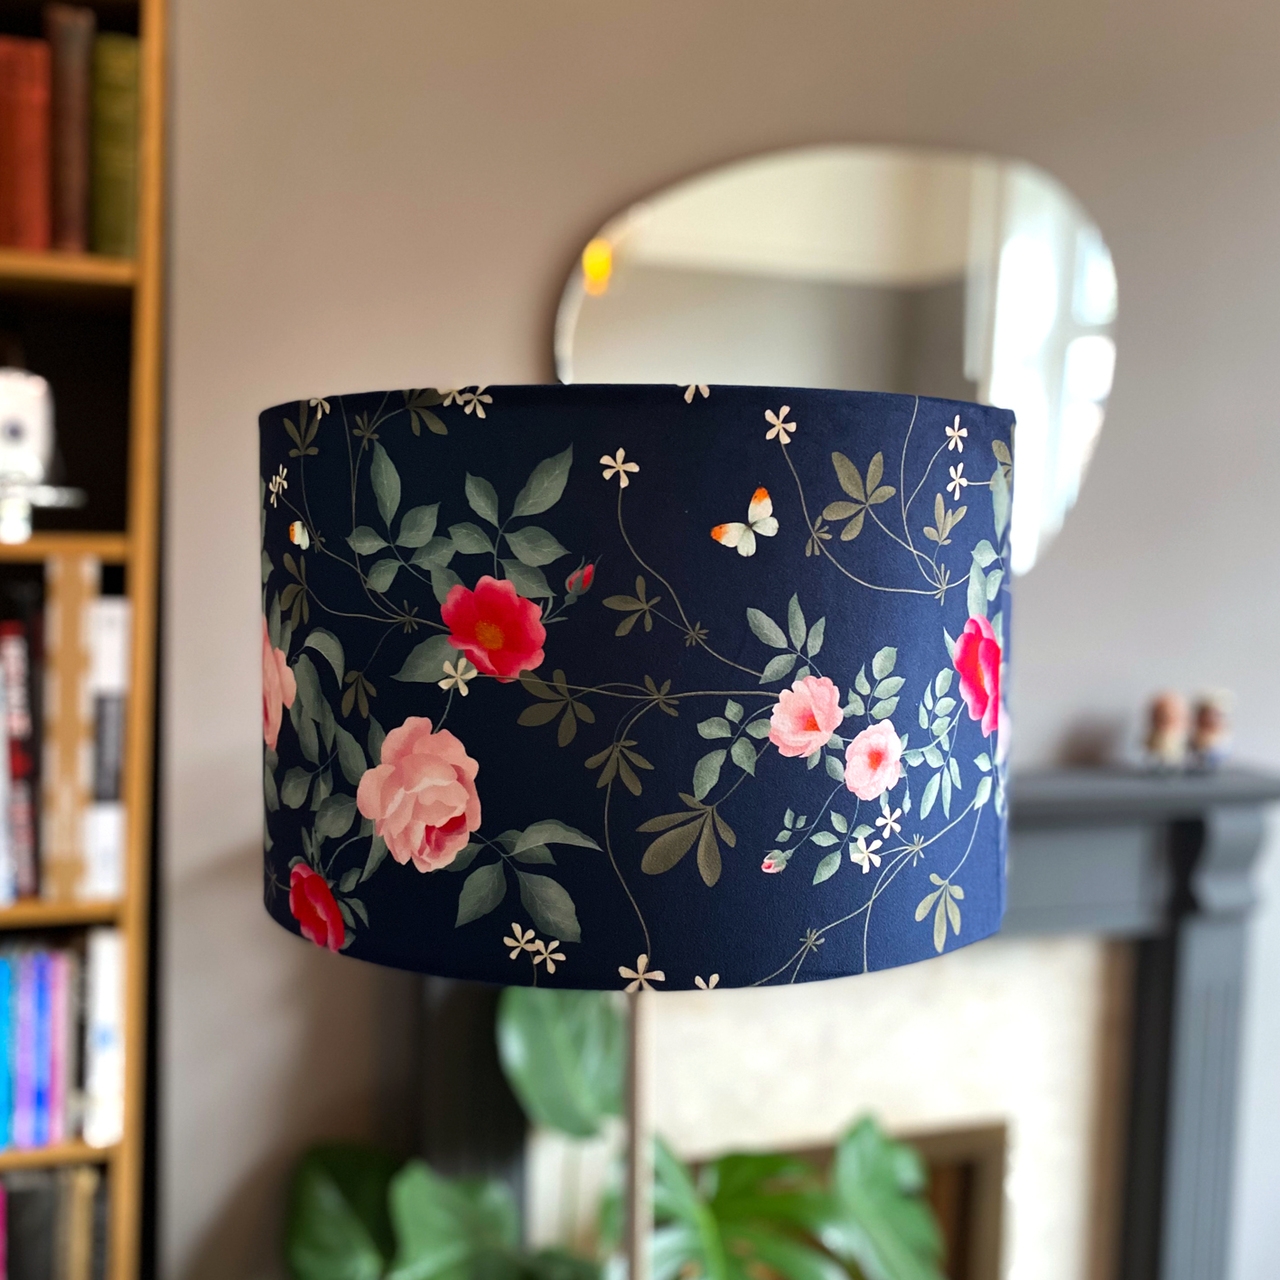 Celina Digby Luxury Soft-Touch Velvet Lampshade – Available for Ceiling Light, Standard Lamp or Table Rose Garden Navy Light (40cm)